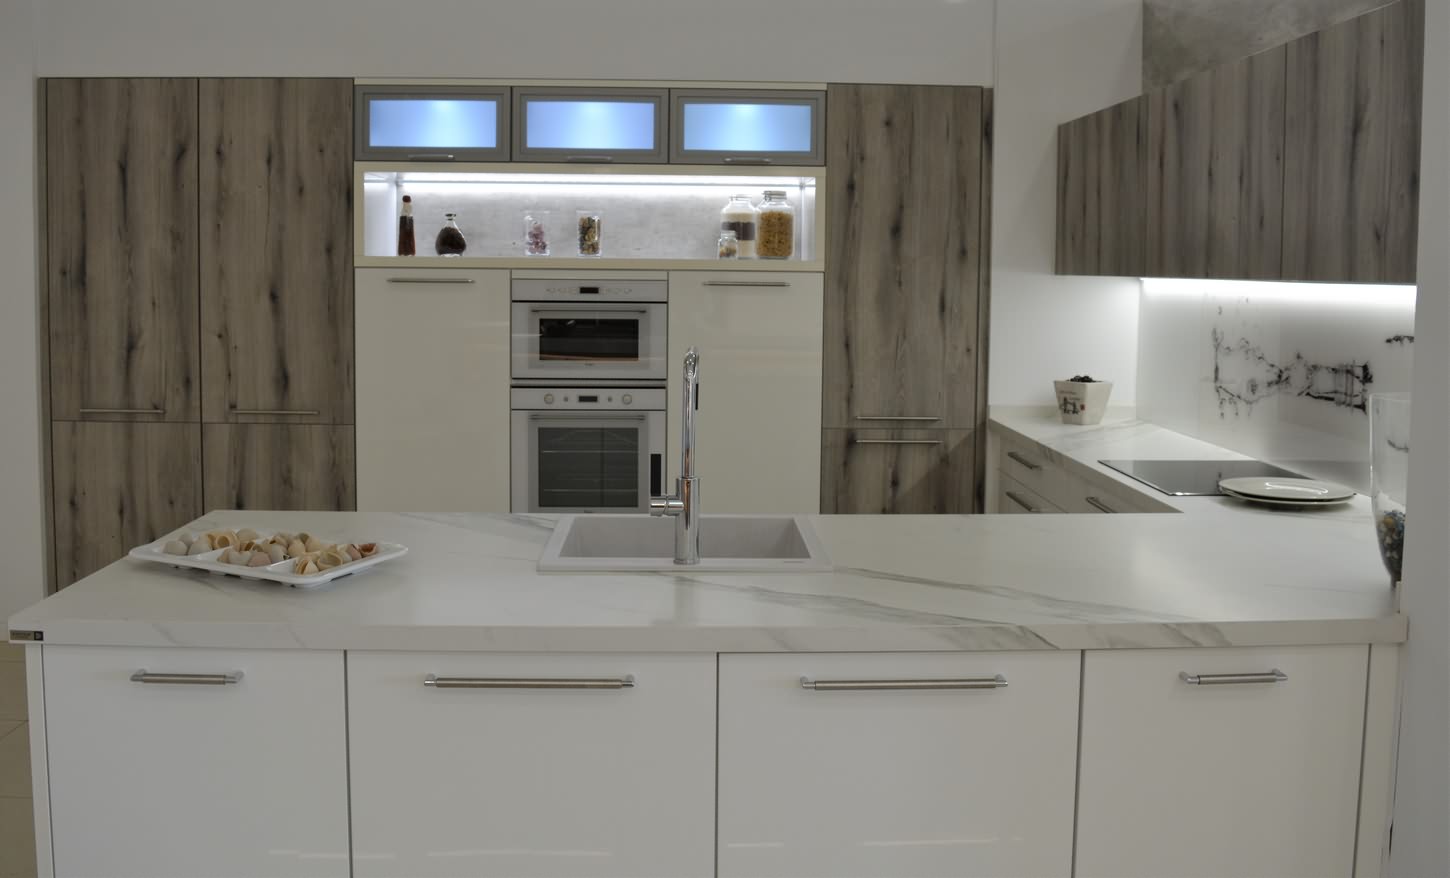 En este momento estás viendo Bluemoon kitchen. Clarity and atmosphere in your kitchen.